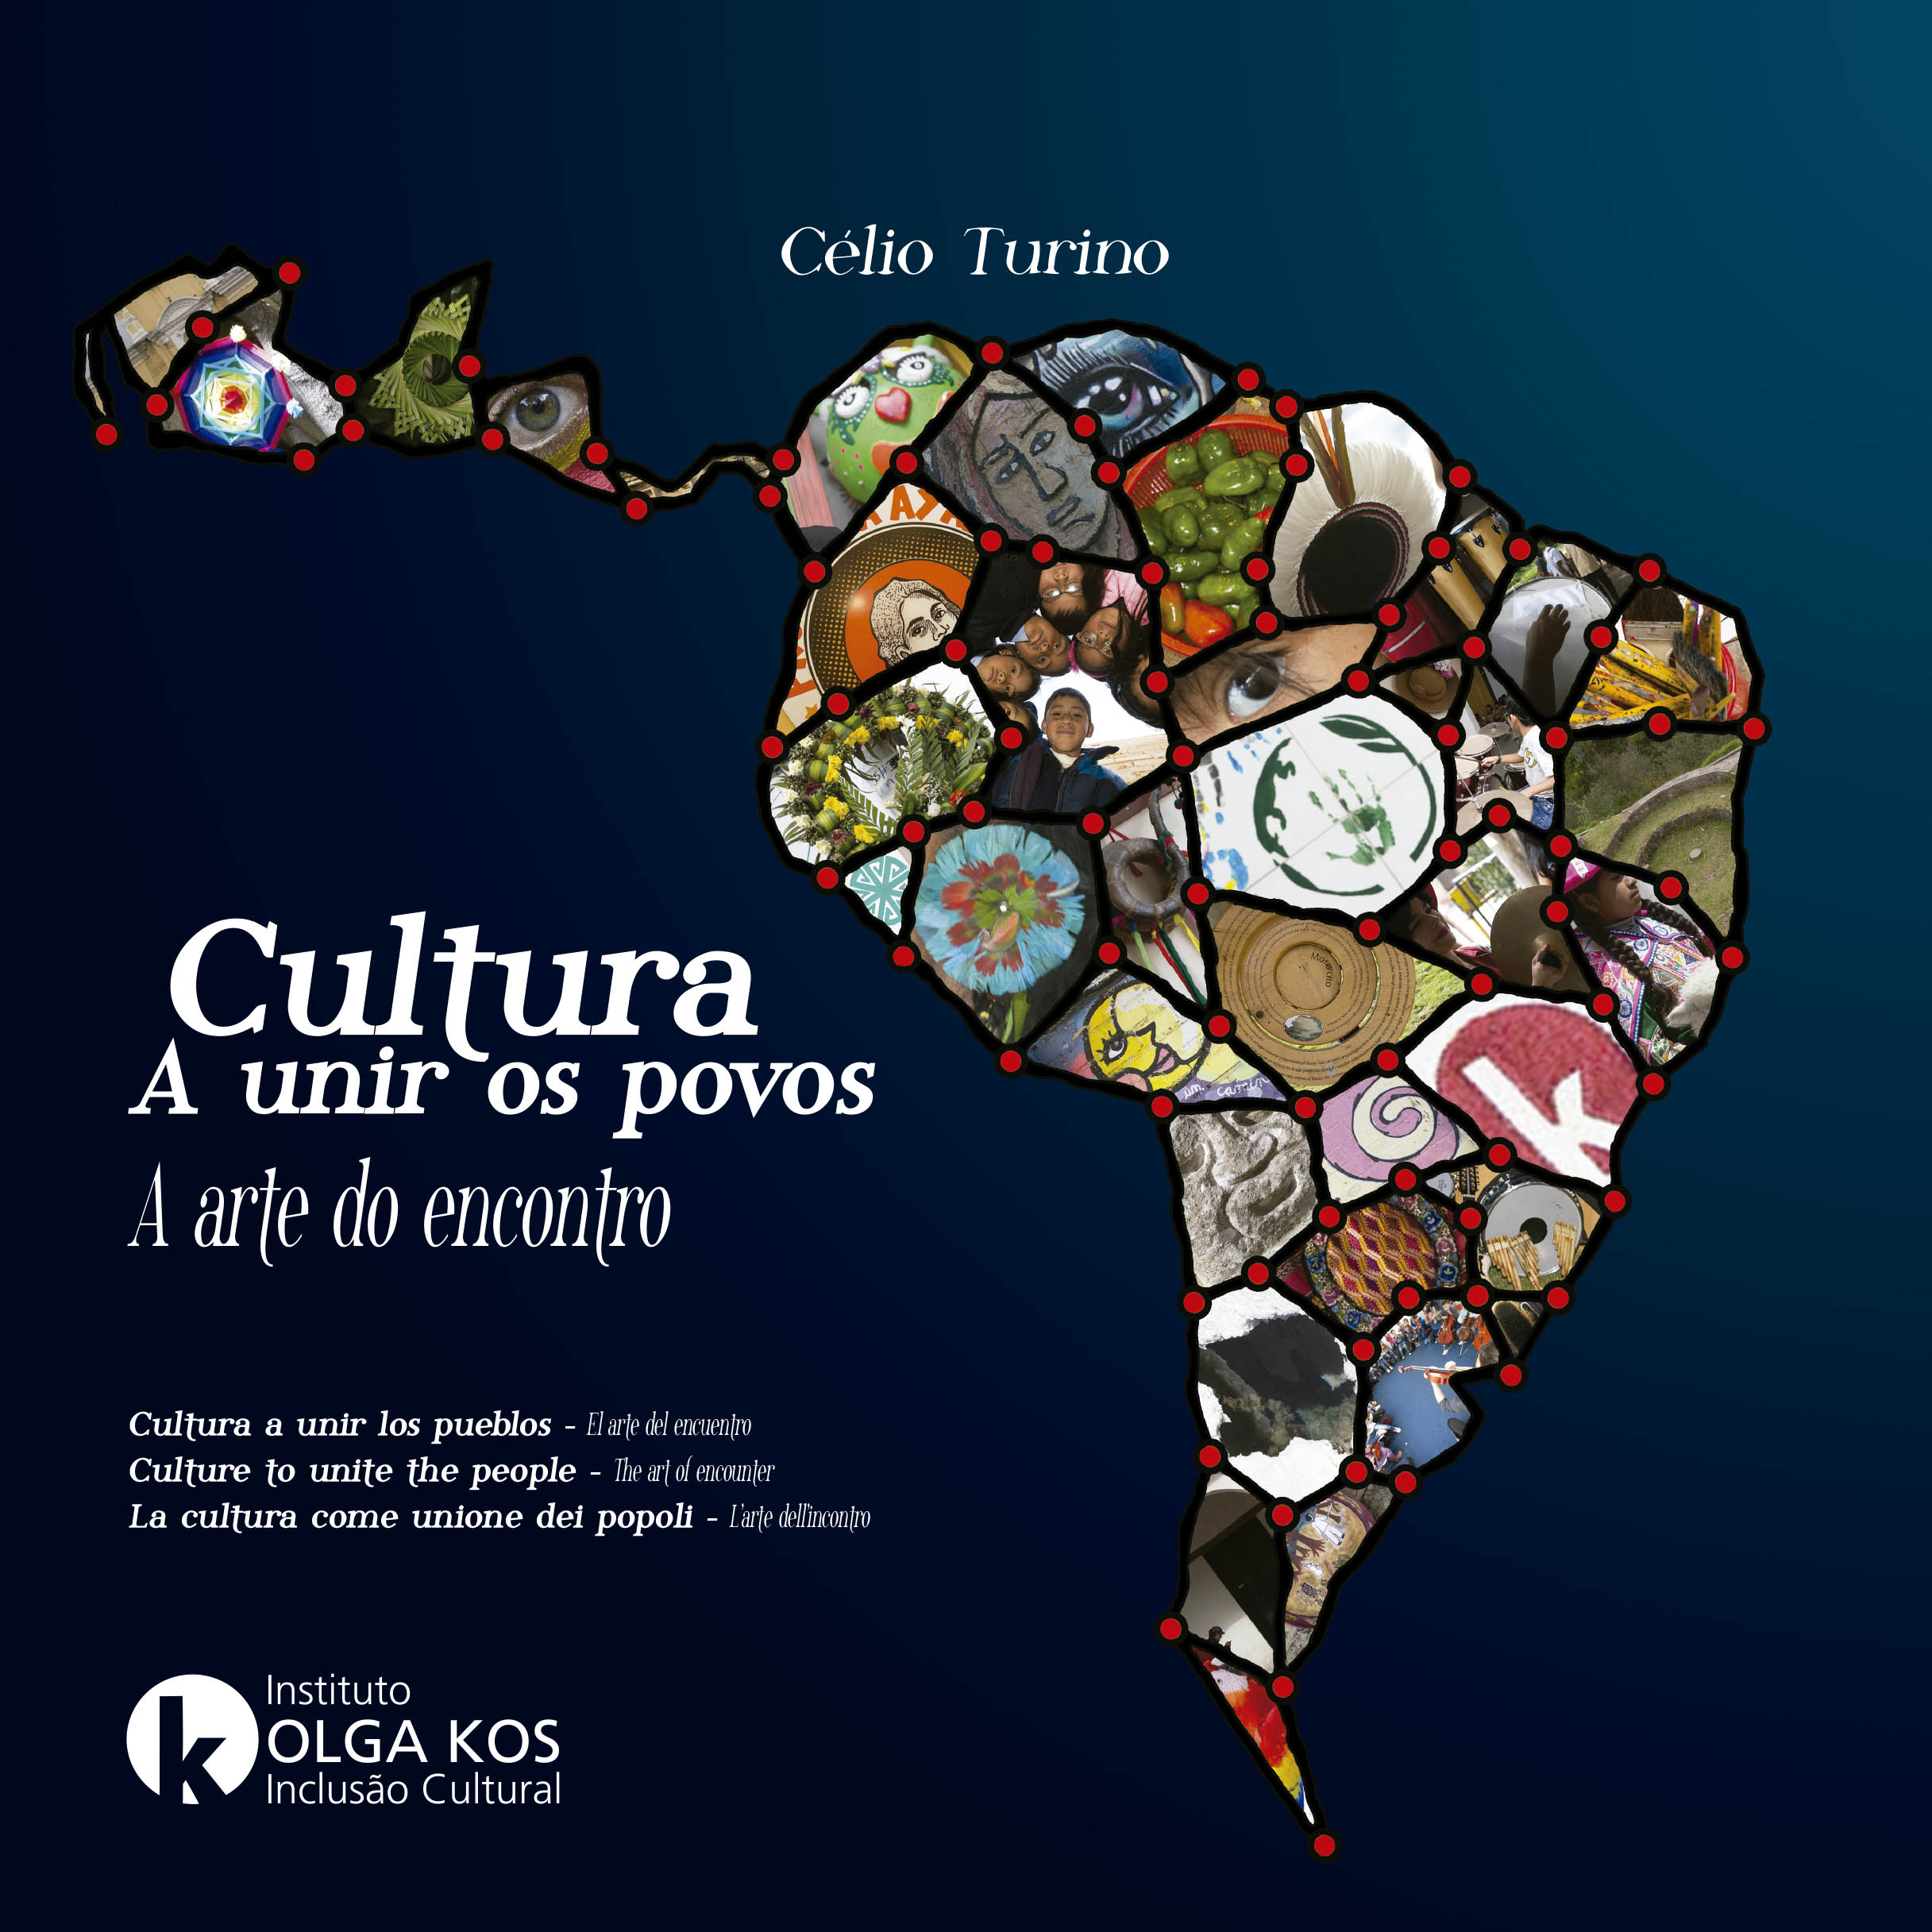 Instituto Latino-Americano de Arte, Cultura e História